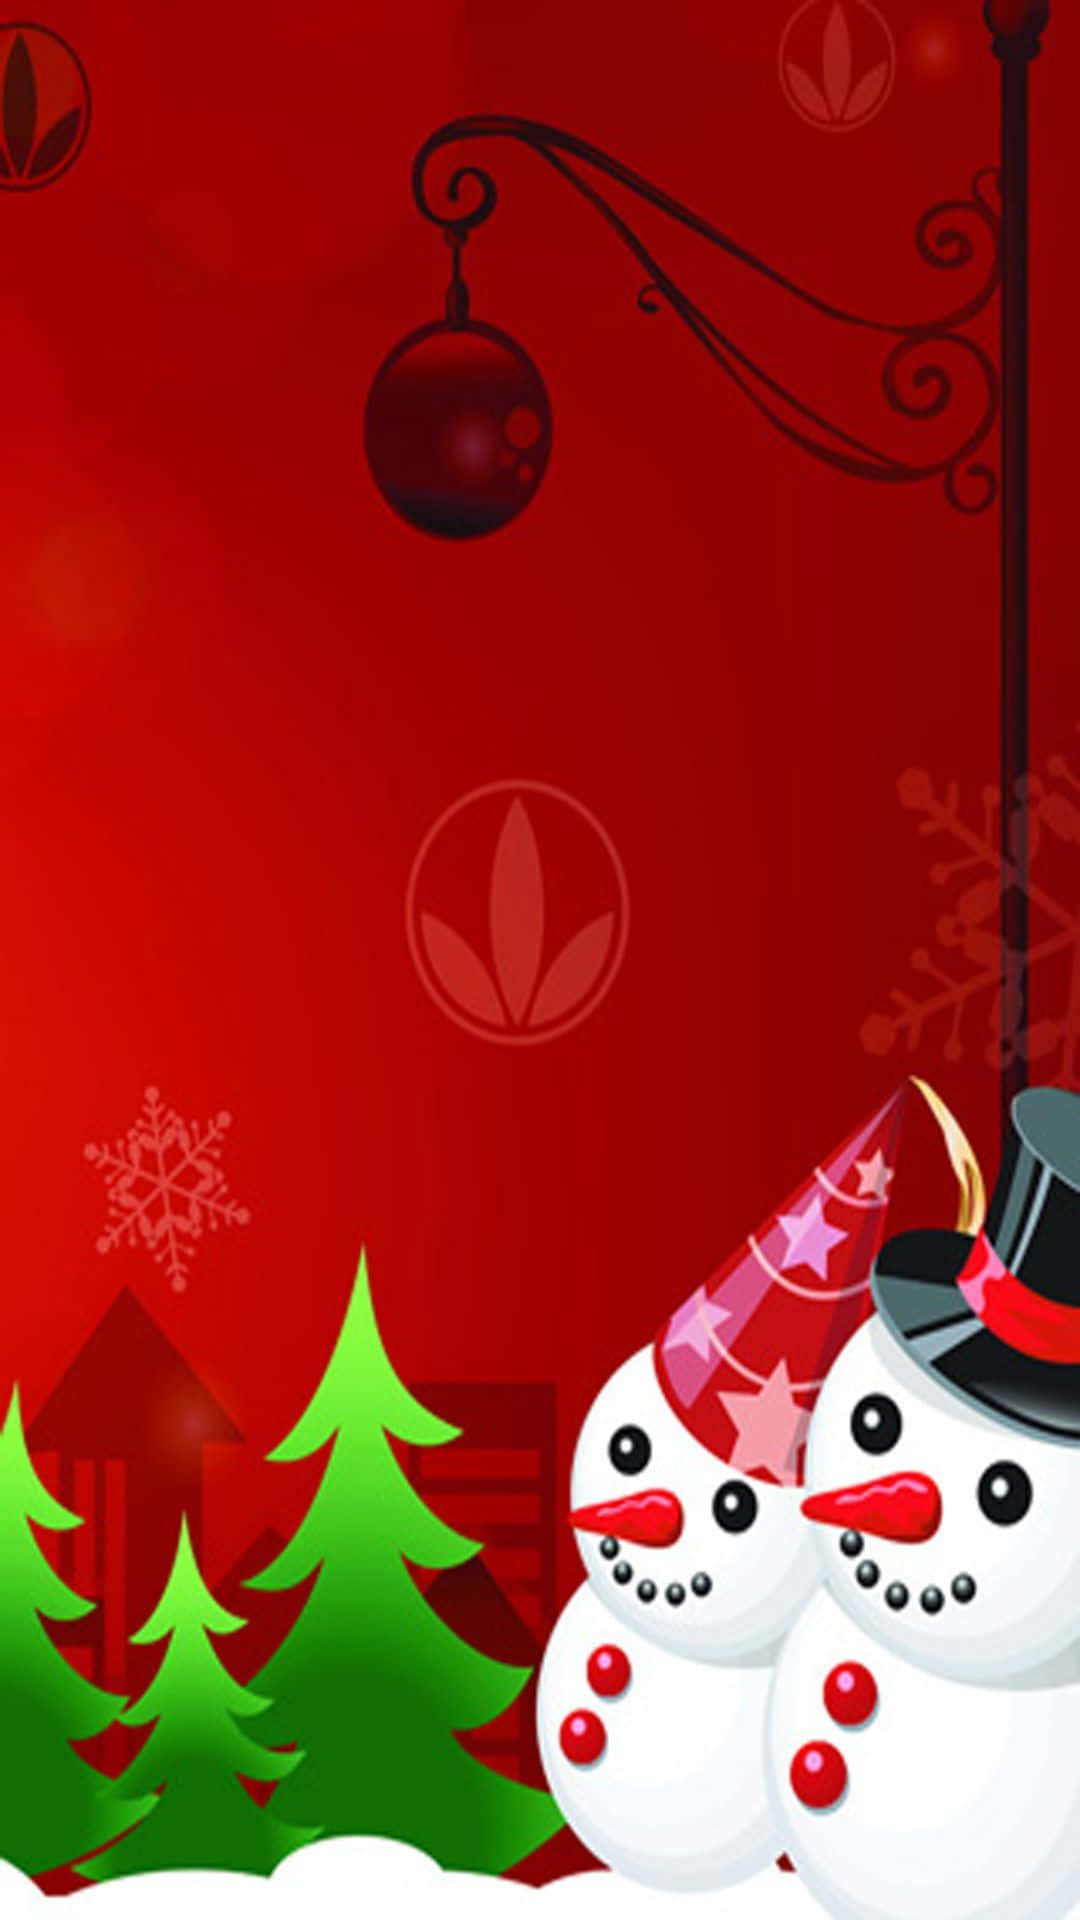 Enjoy the Christmas spirit with a festive phone background